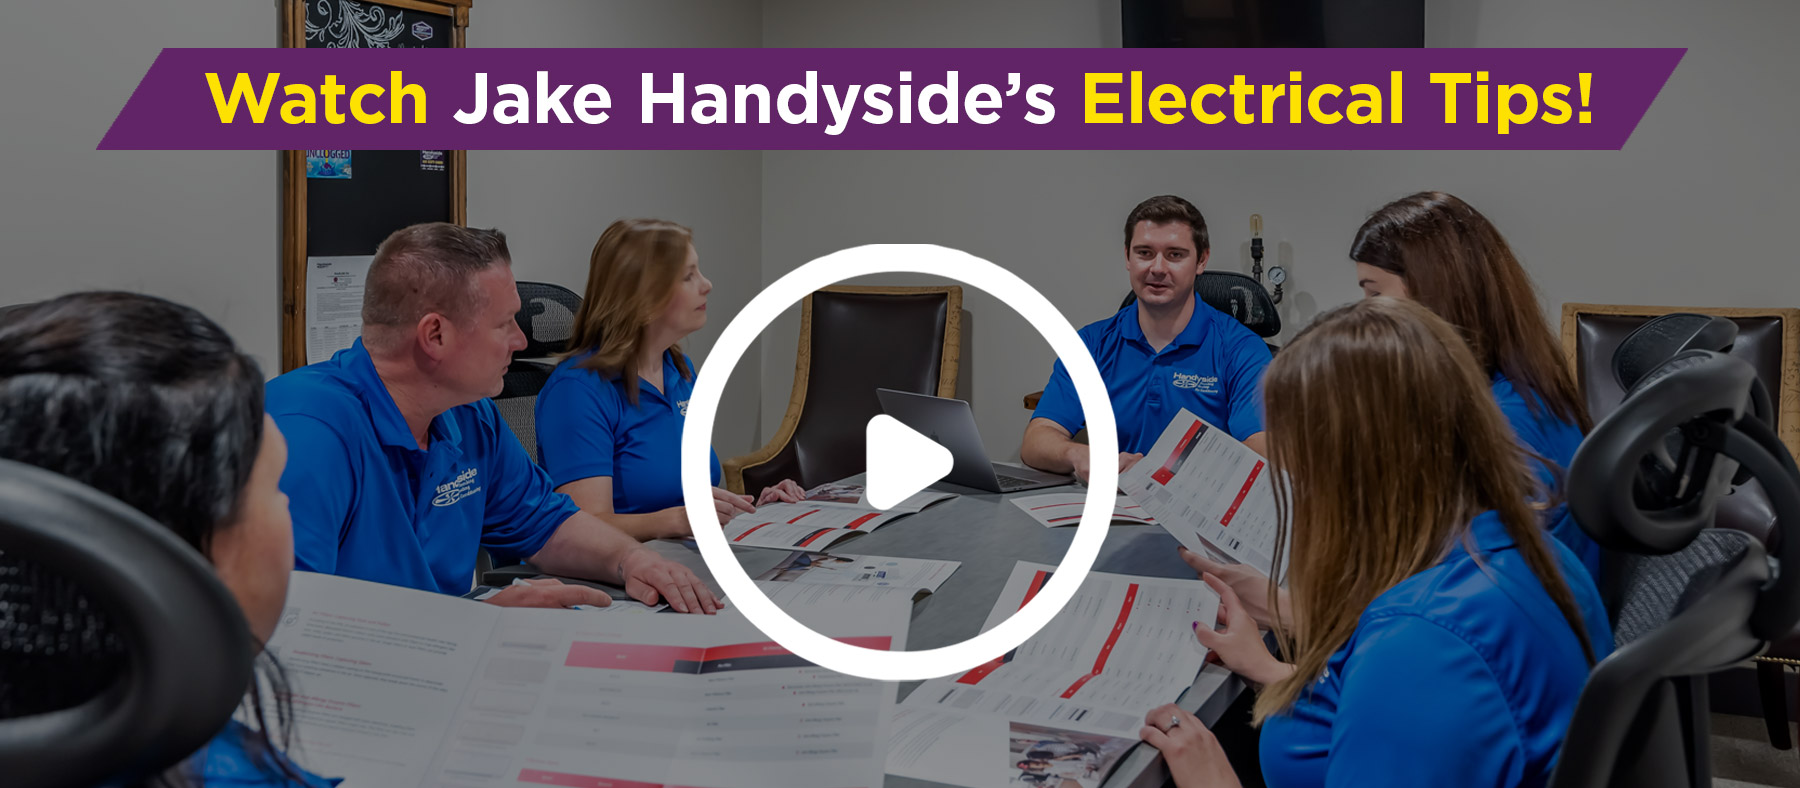 Jake Handyside's electrical tips video